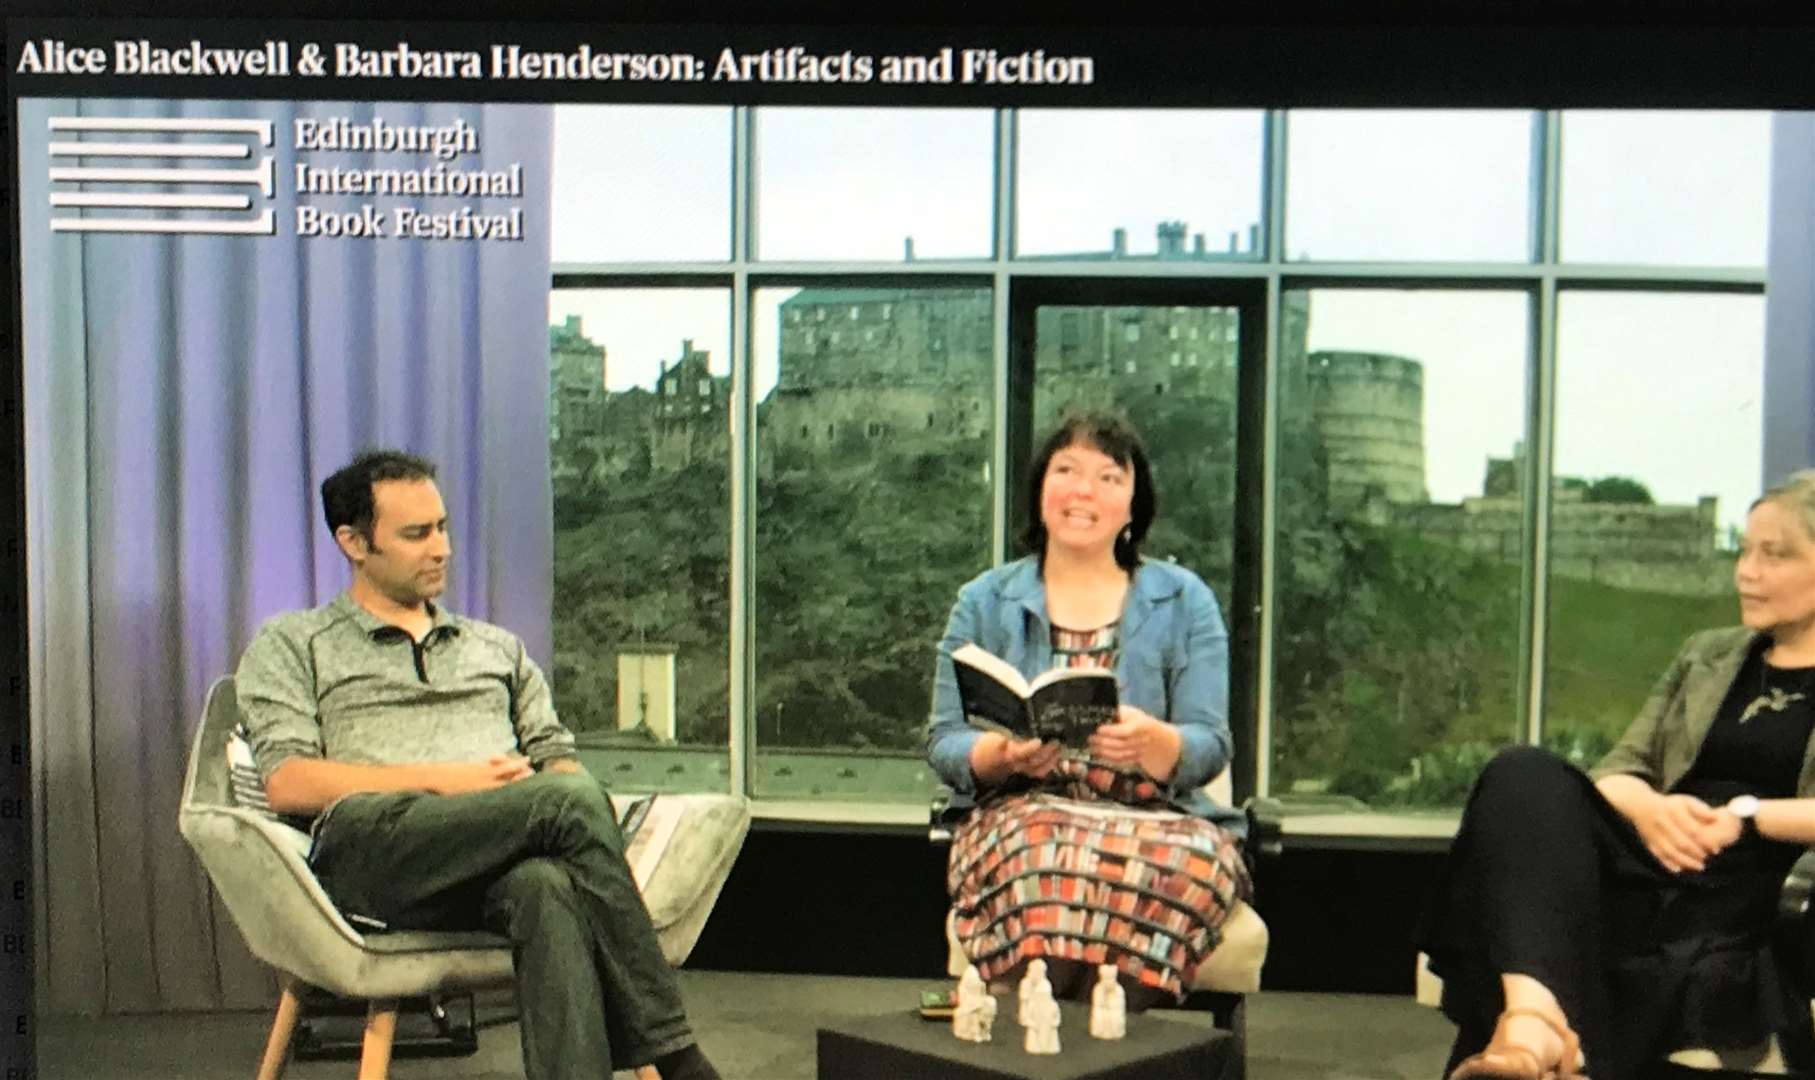 Barbara henderson at her event at Edinburgh Book Festival.